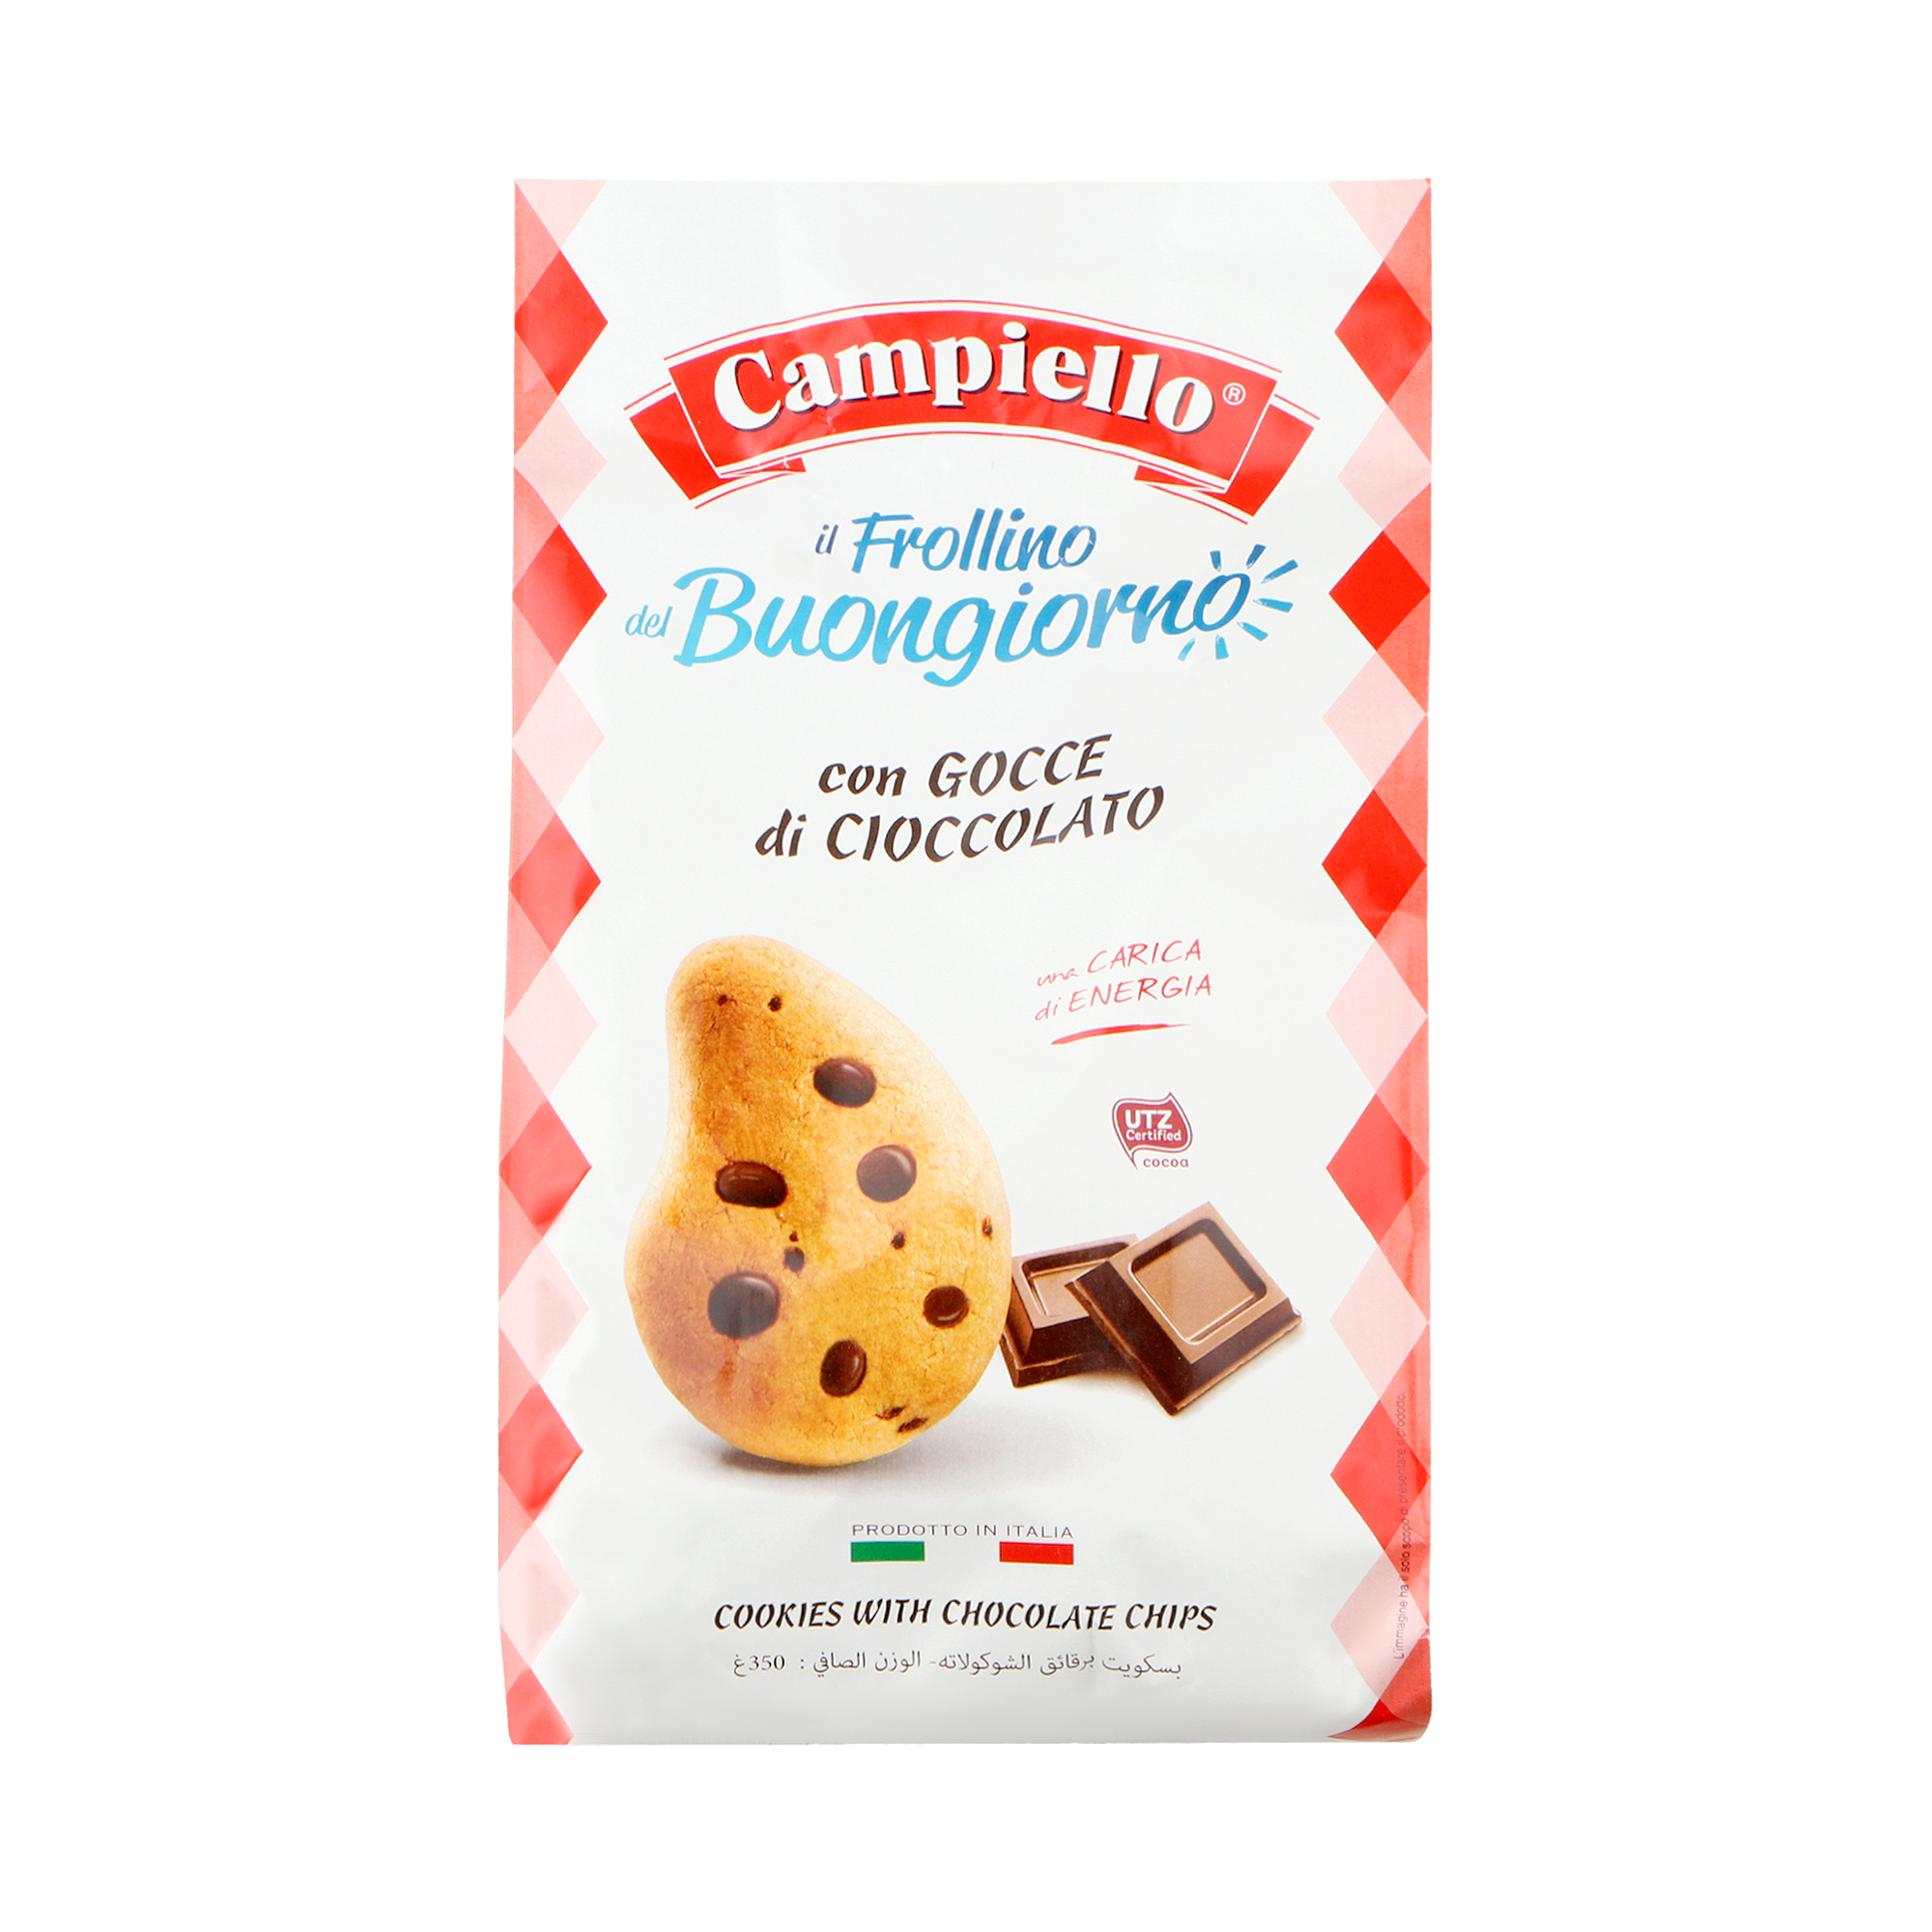 Печенье Campiello il Frollino del Buongiorno с шоколадом 350 г печенье ulker petit beurre с шоколадом 175 г